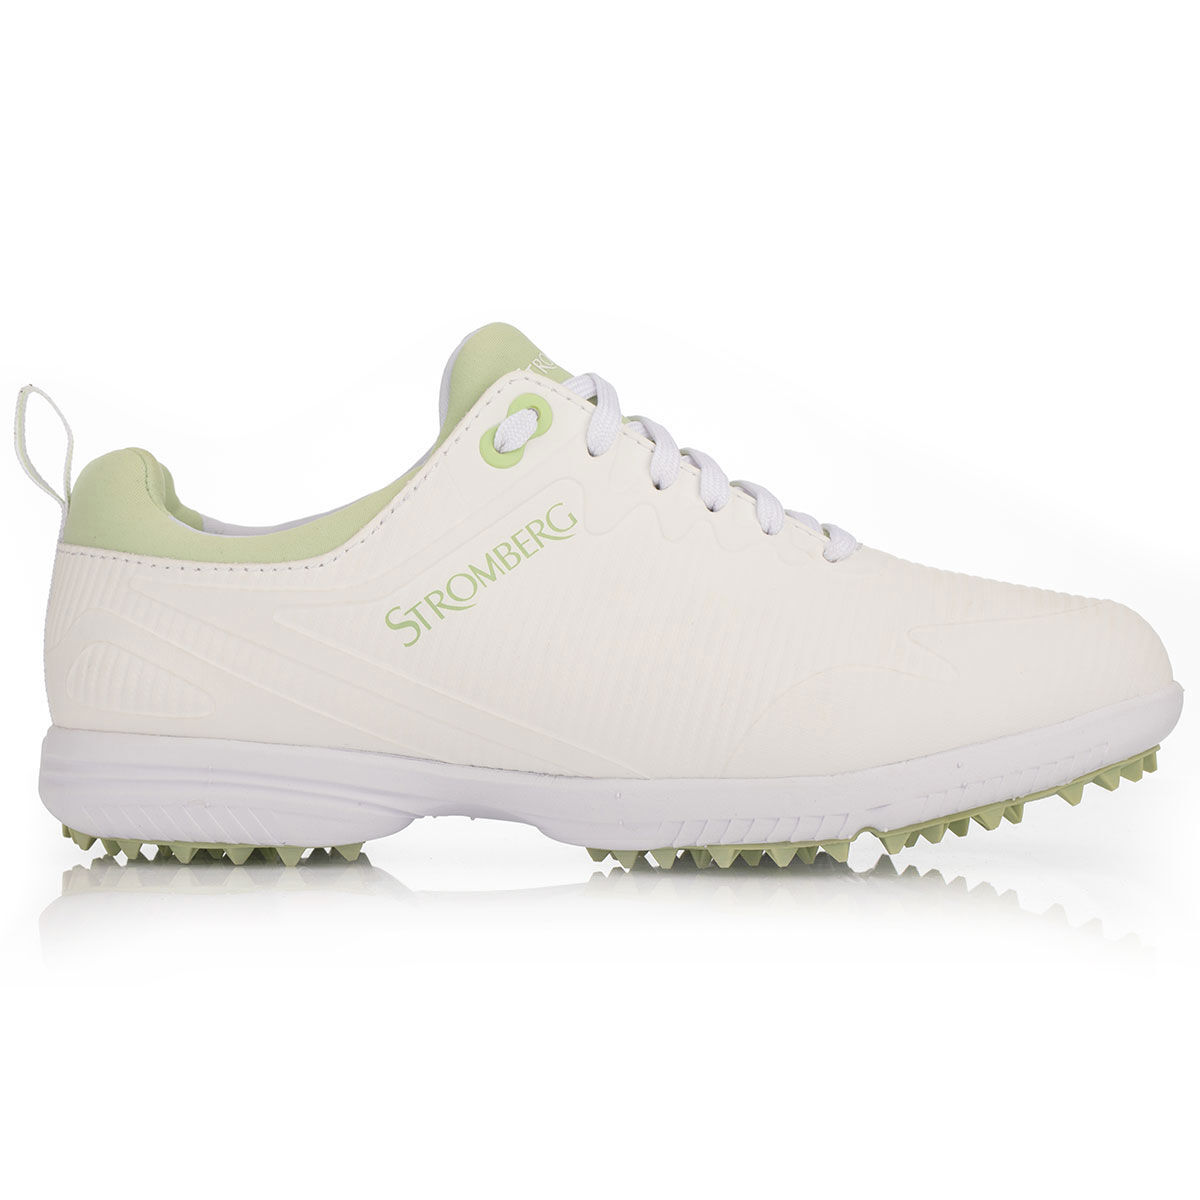 Chaussures Stromberg Tempo pour femmes, femme, White/sage, 4  | Online Golf